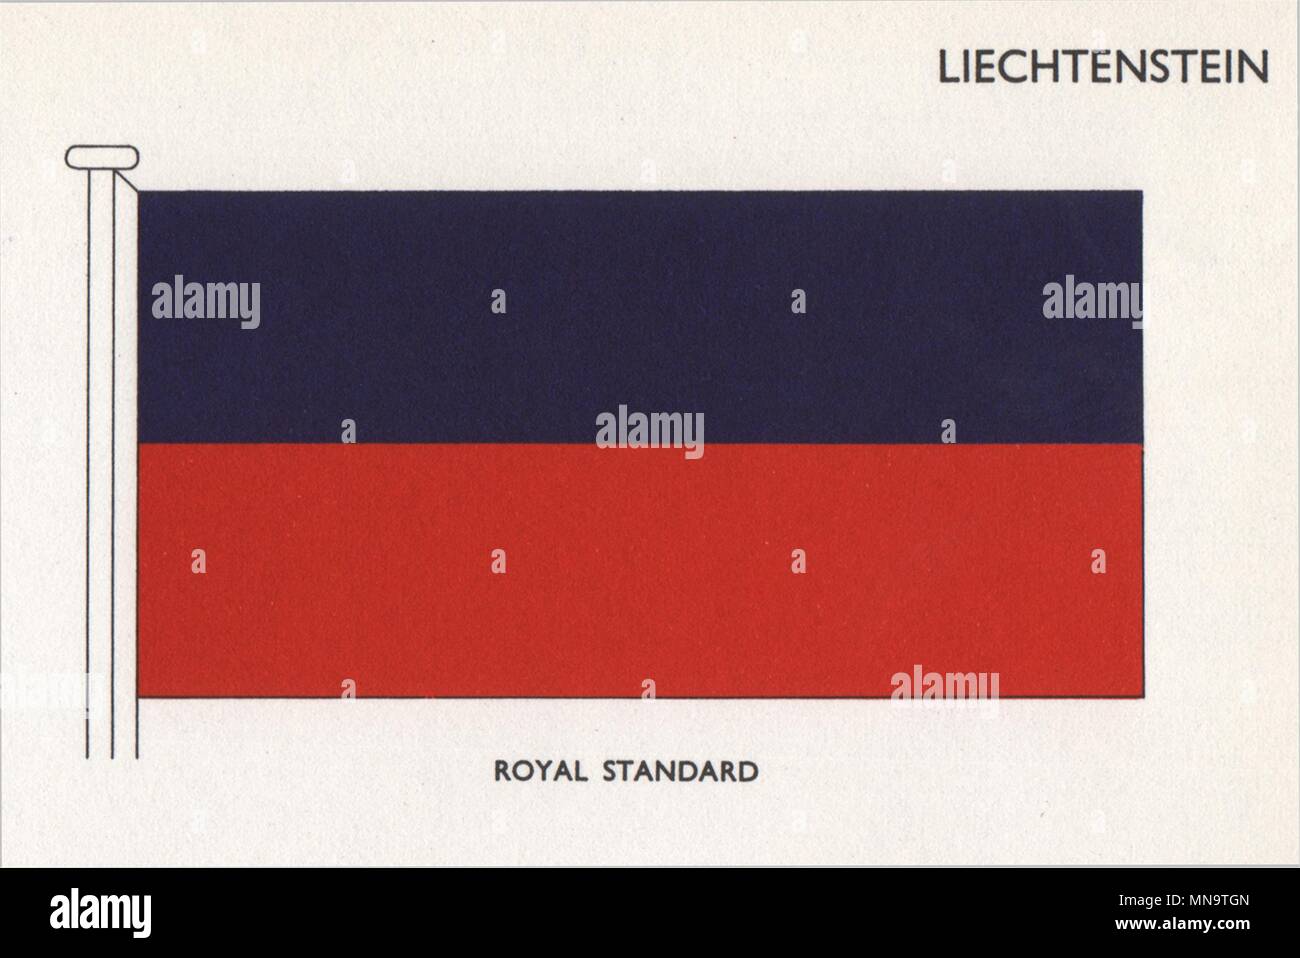 LIECHTENSTEIN FLAGS. Royal Standard 1958 old vintage print picture Stock Photo